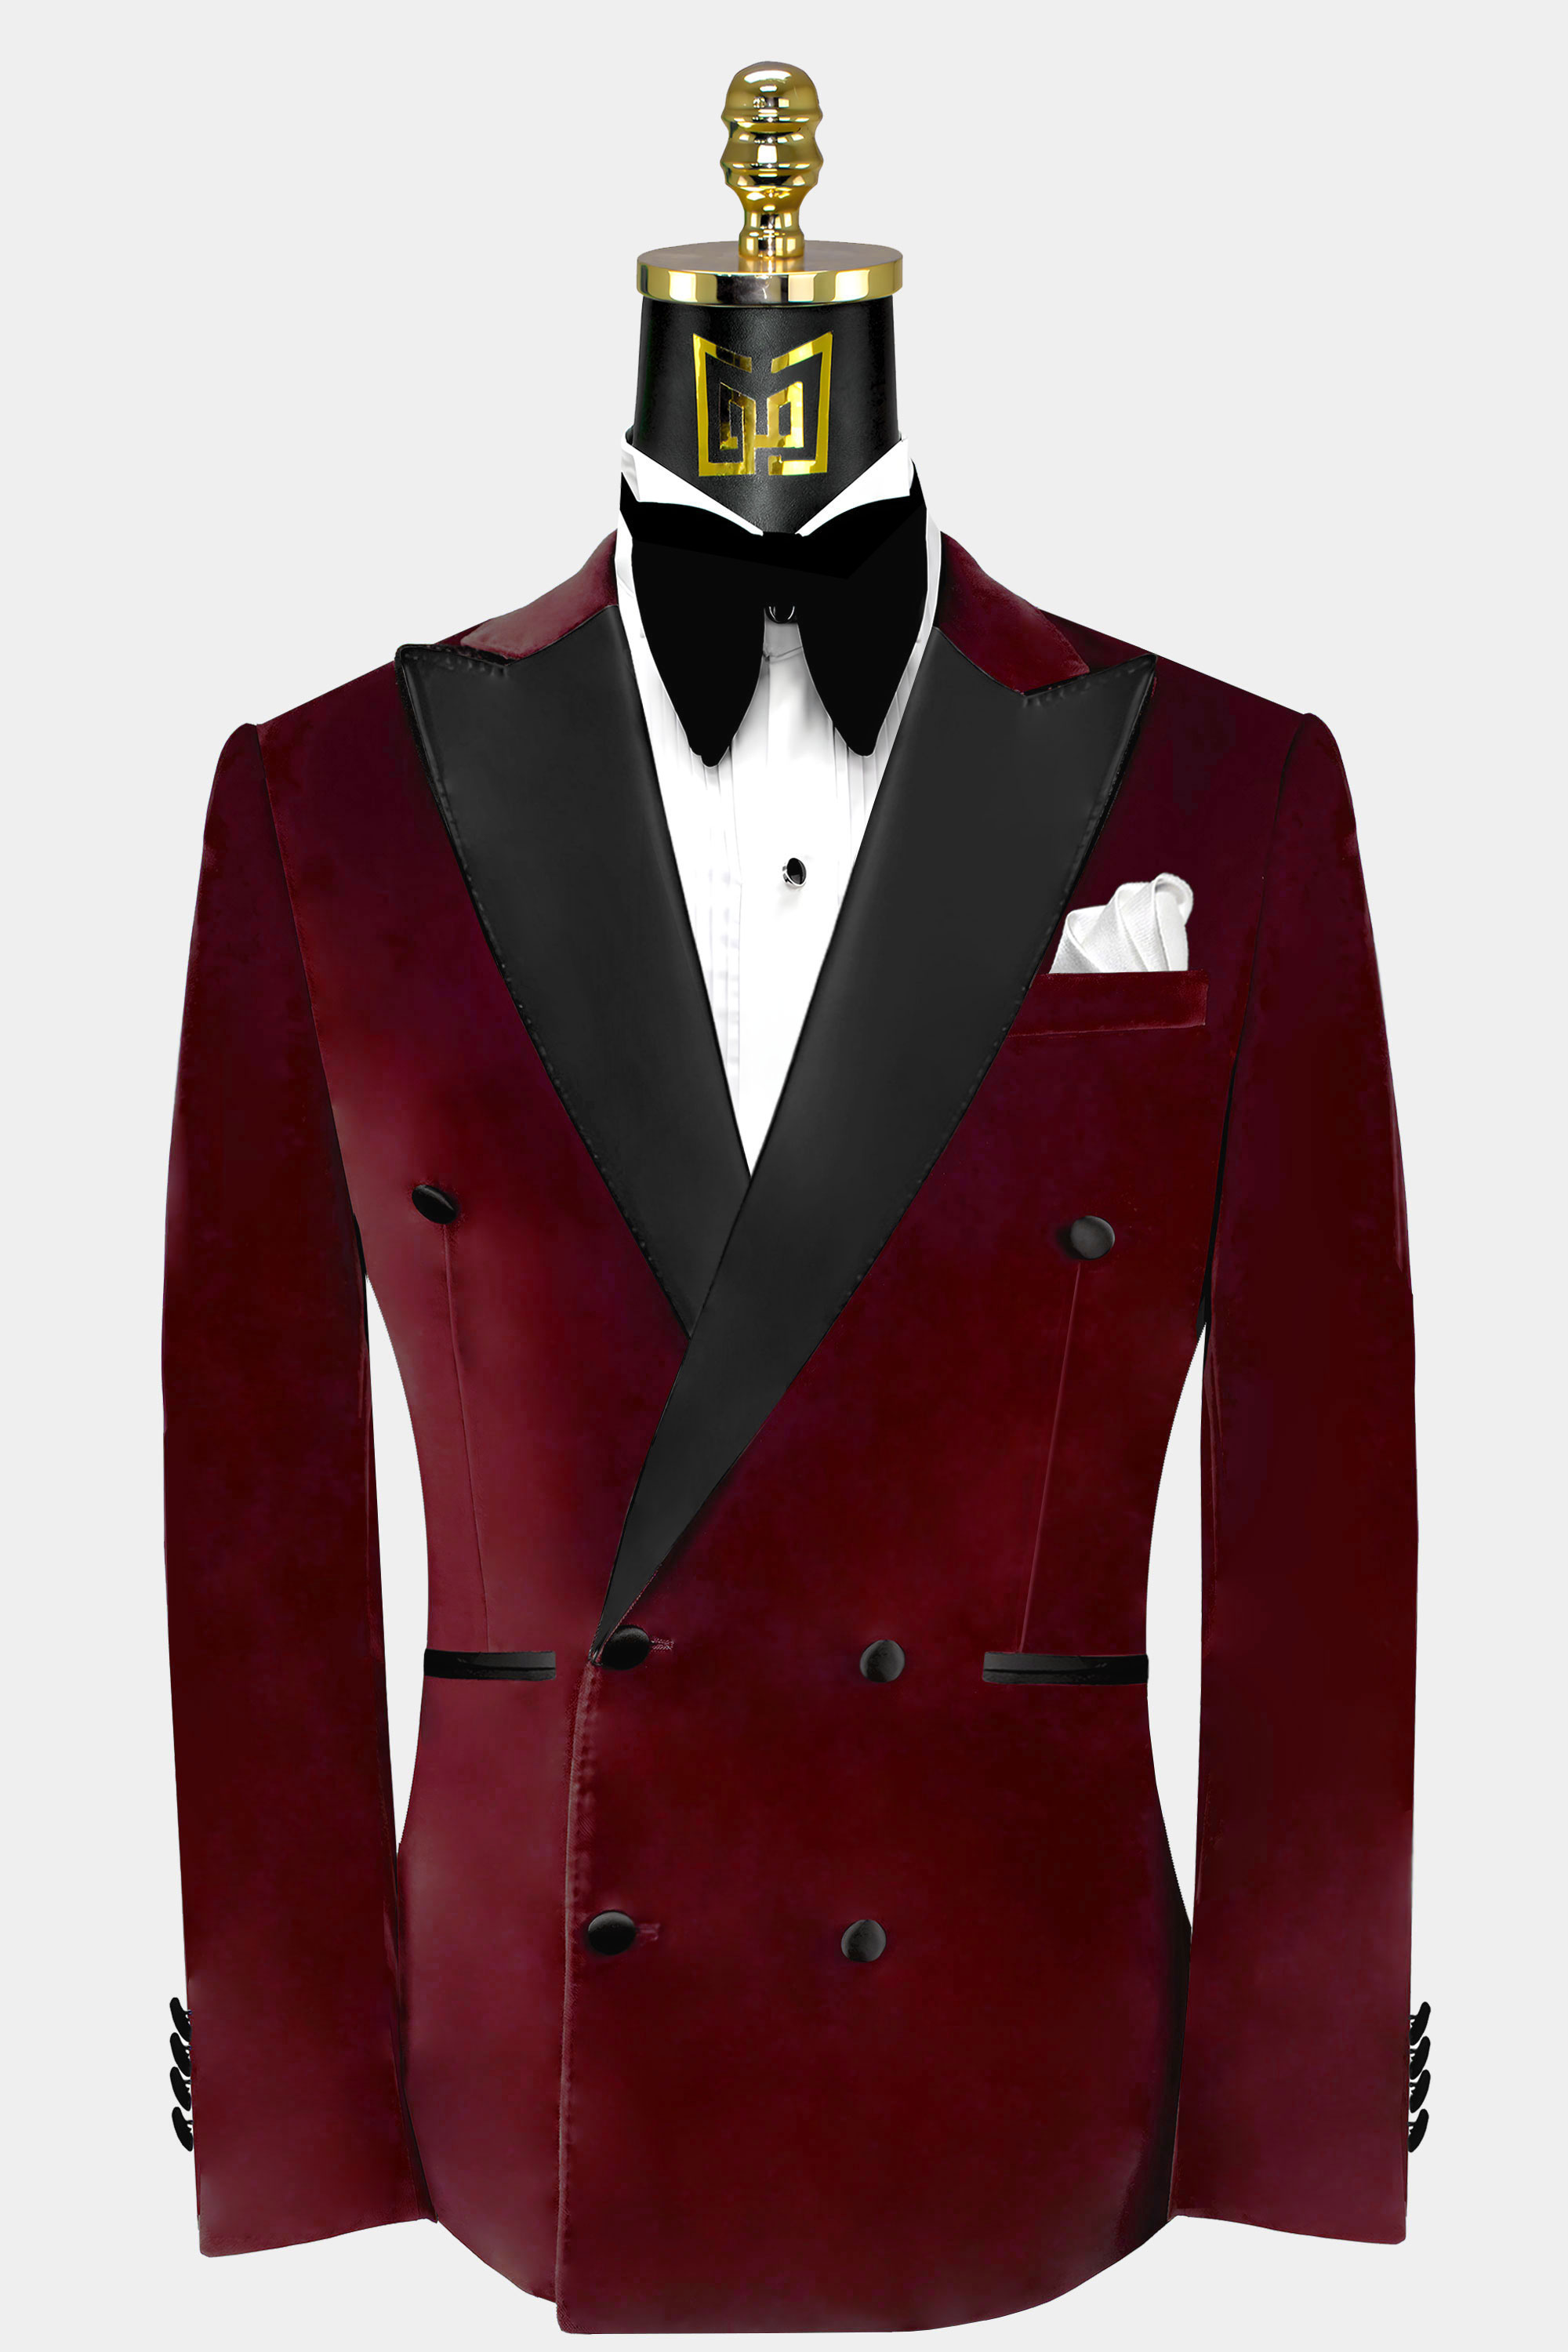 Mens-Double-Breasted-Burgundy-Velvet-Tuxedo-Jacket-Groom-Wedding-Prom-Blazer-from-Gentlemansguru.com